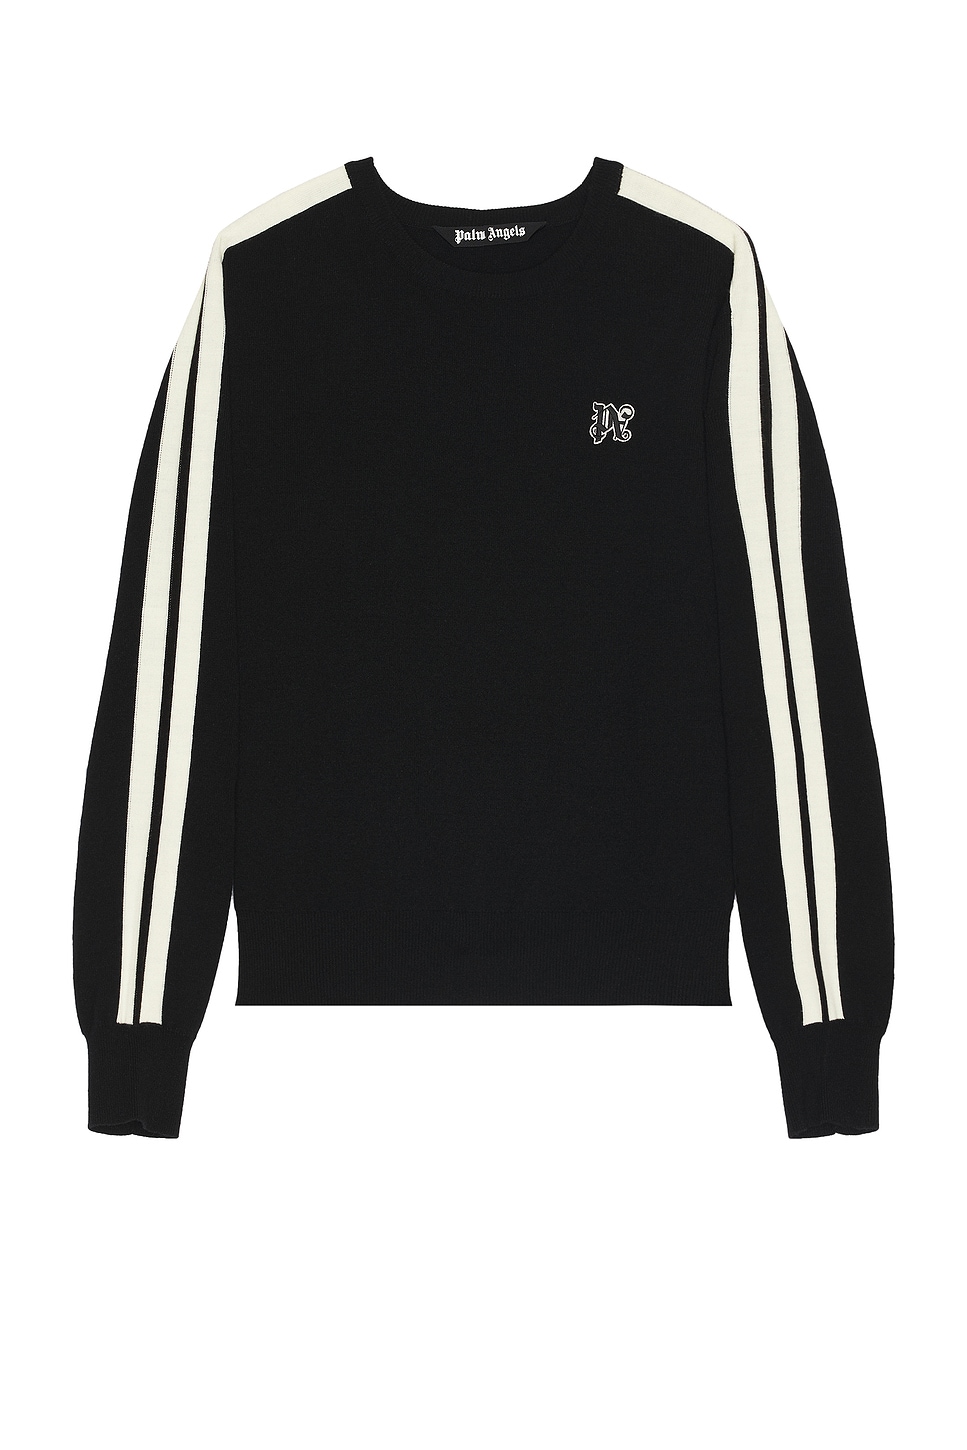 Pa Monogram Track Sweater in Black